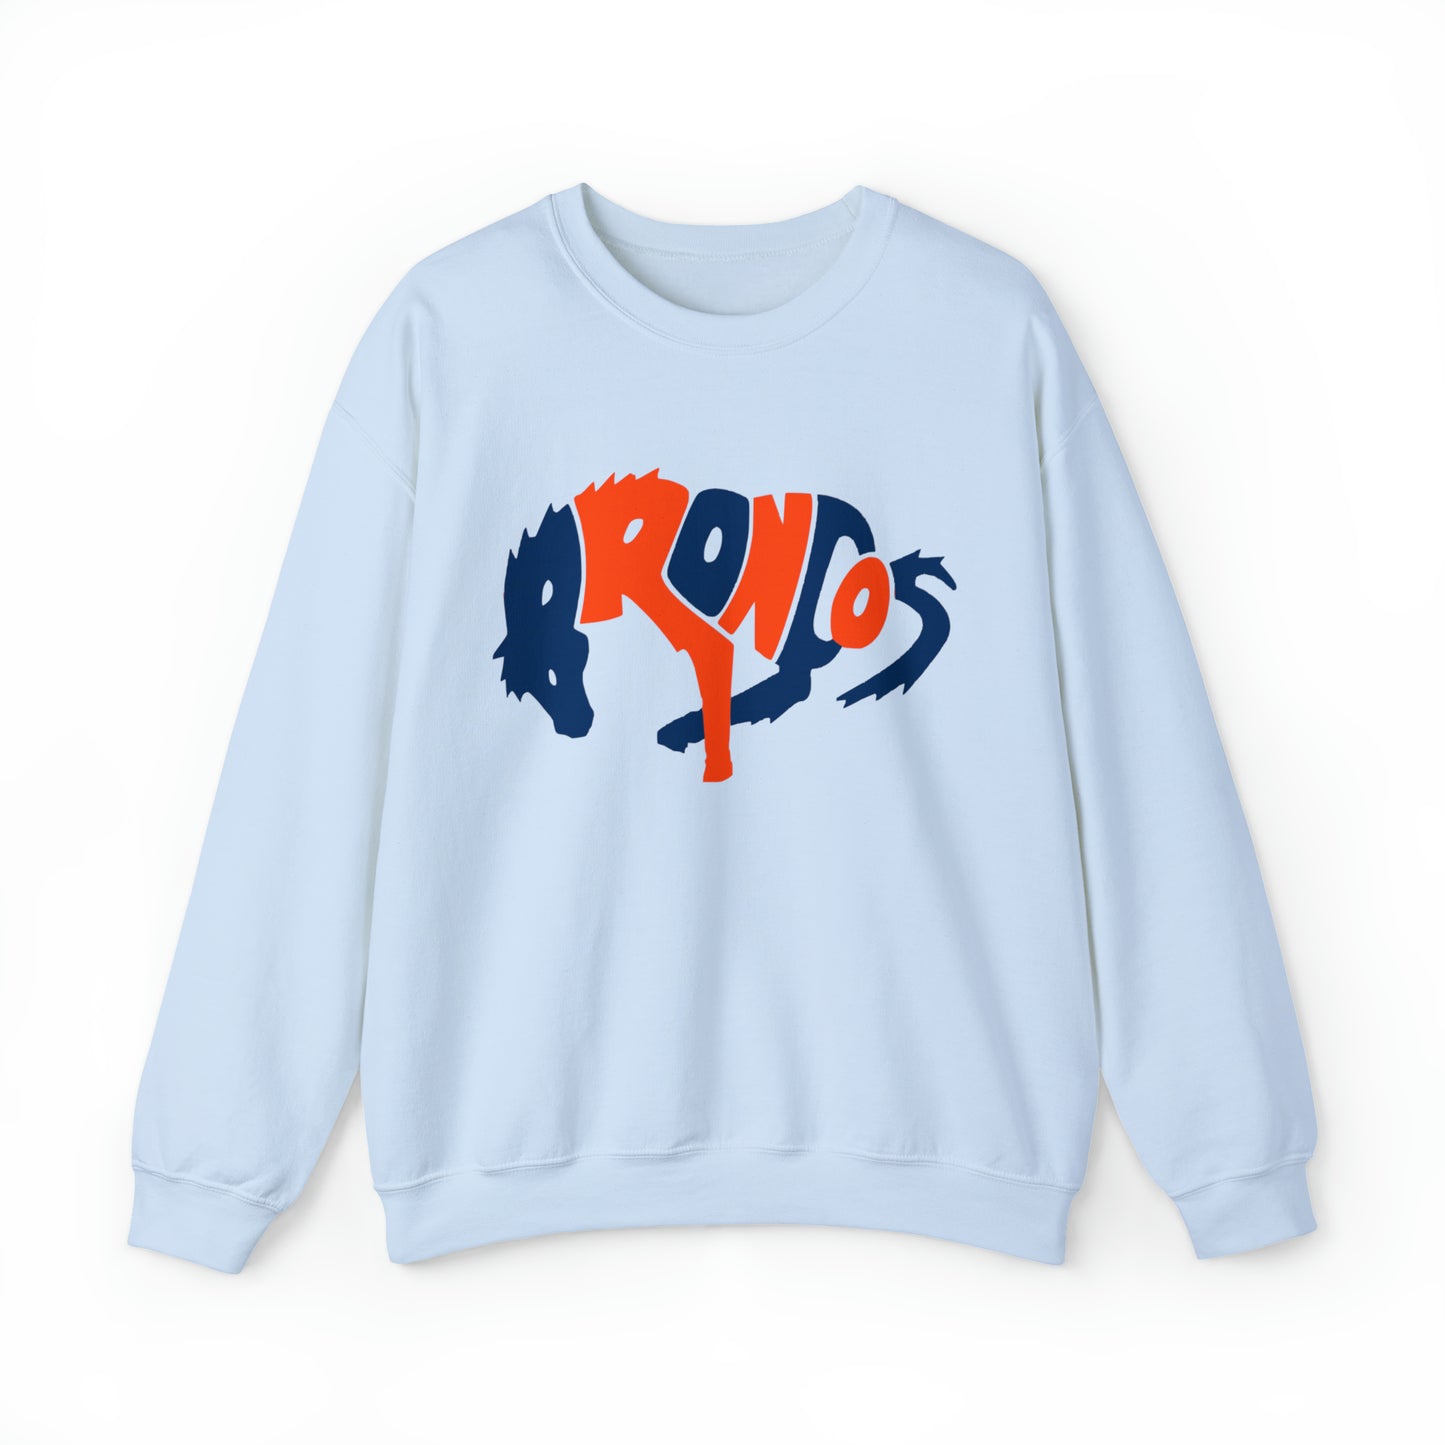 Retro Denver Broncos Crewneck Sweatshirt - Vintage Football - Men's & Women's Unisex Sizing - Design 3